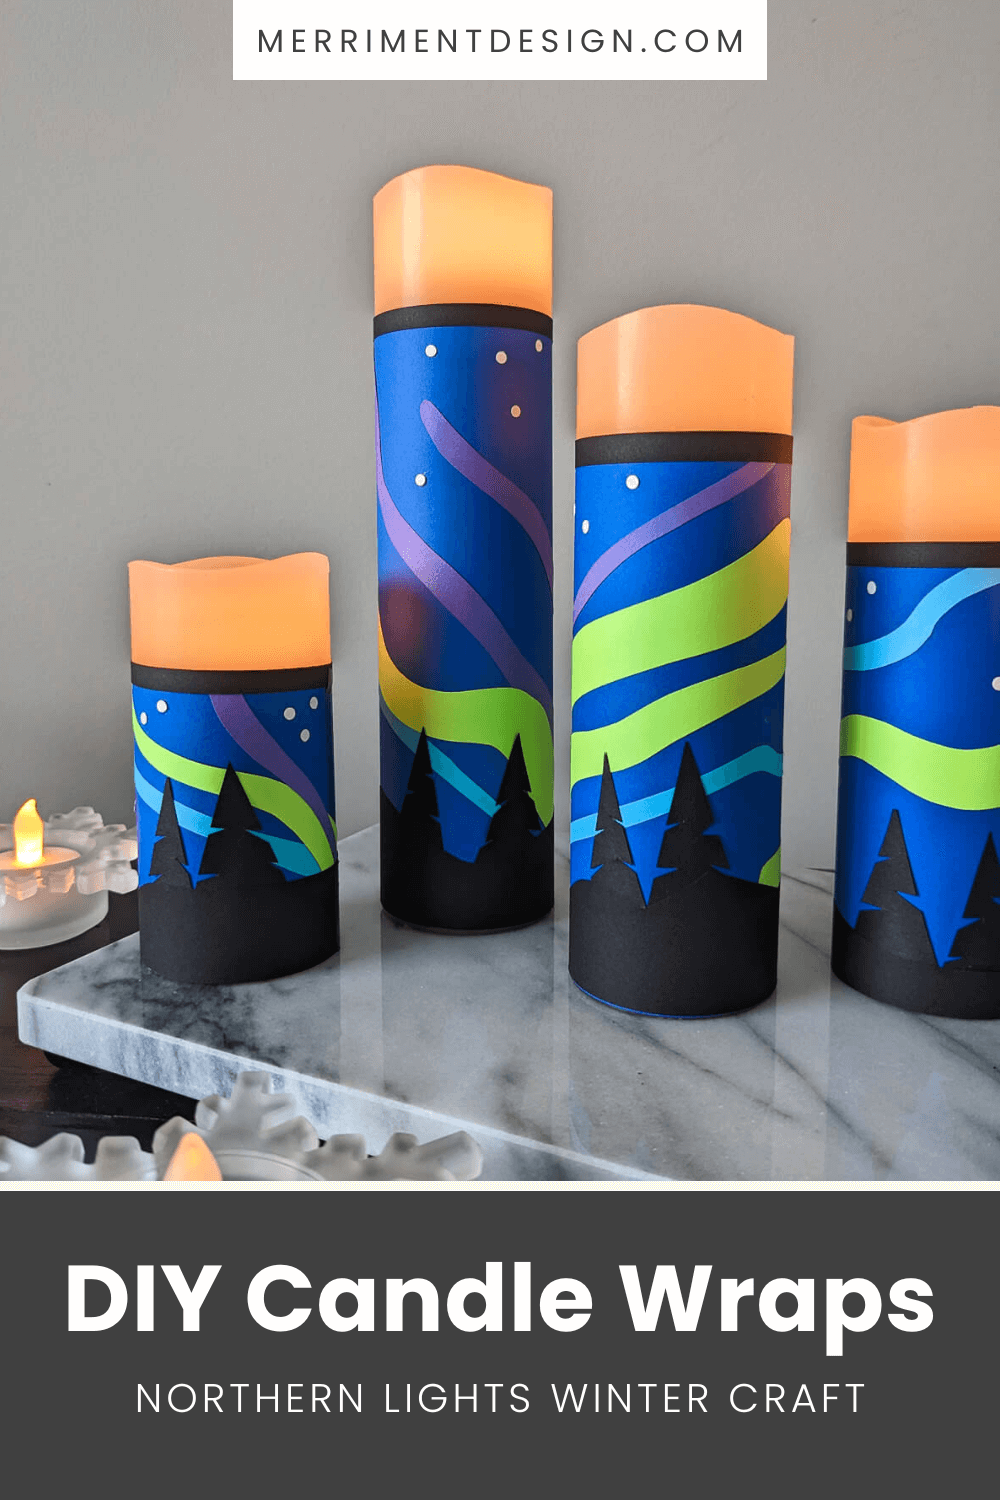 https://www.merrimentdesign.com/images/Northern-Lights-winter-craft-DIY-candle-wraps.png